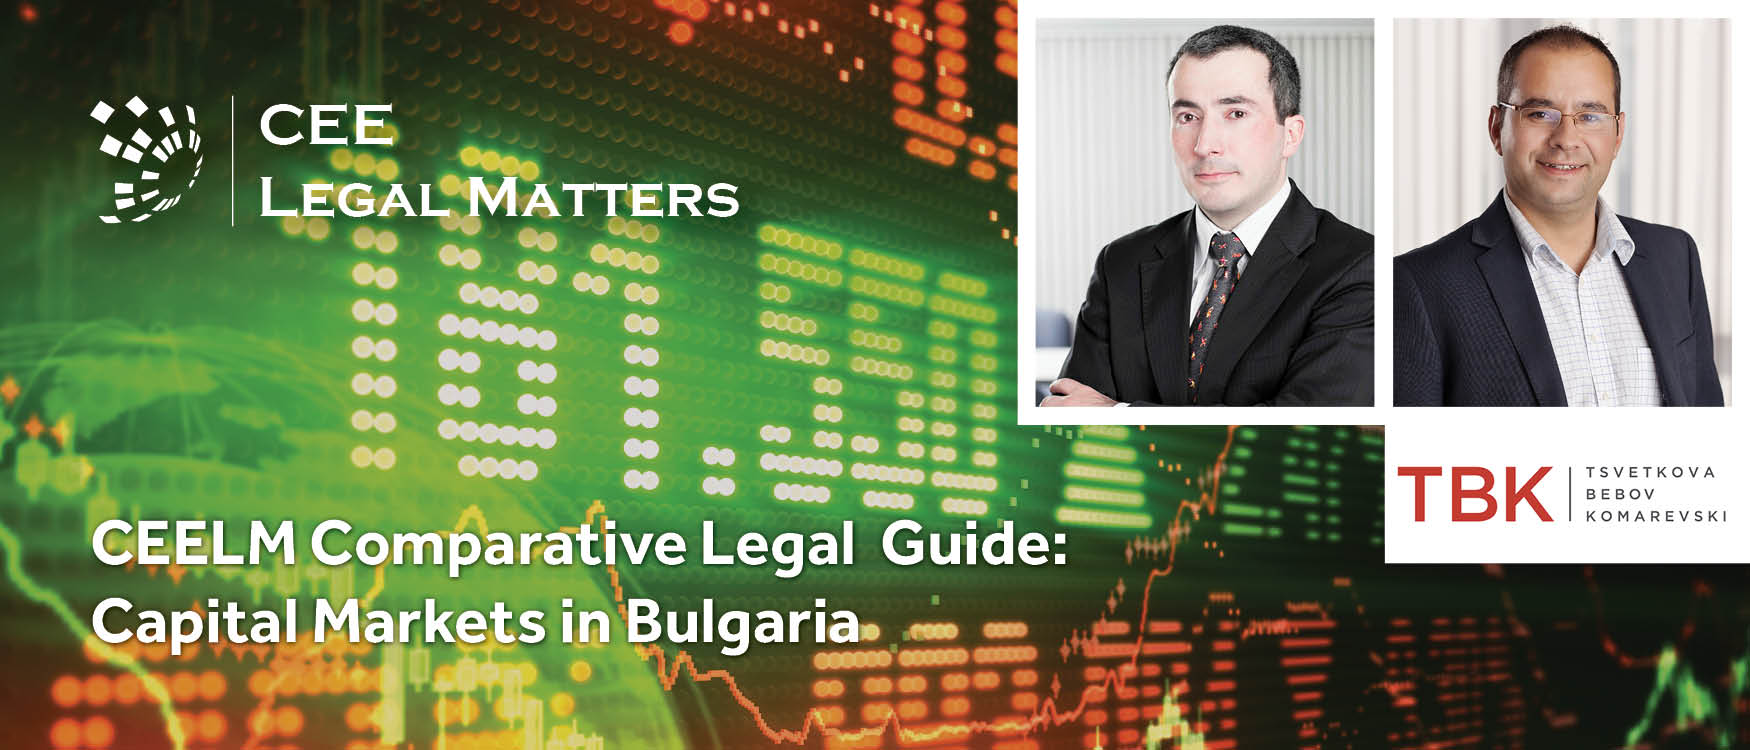 Capital Markets in Bulgaria